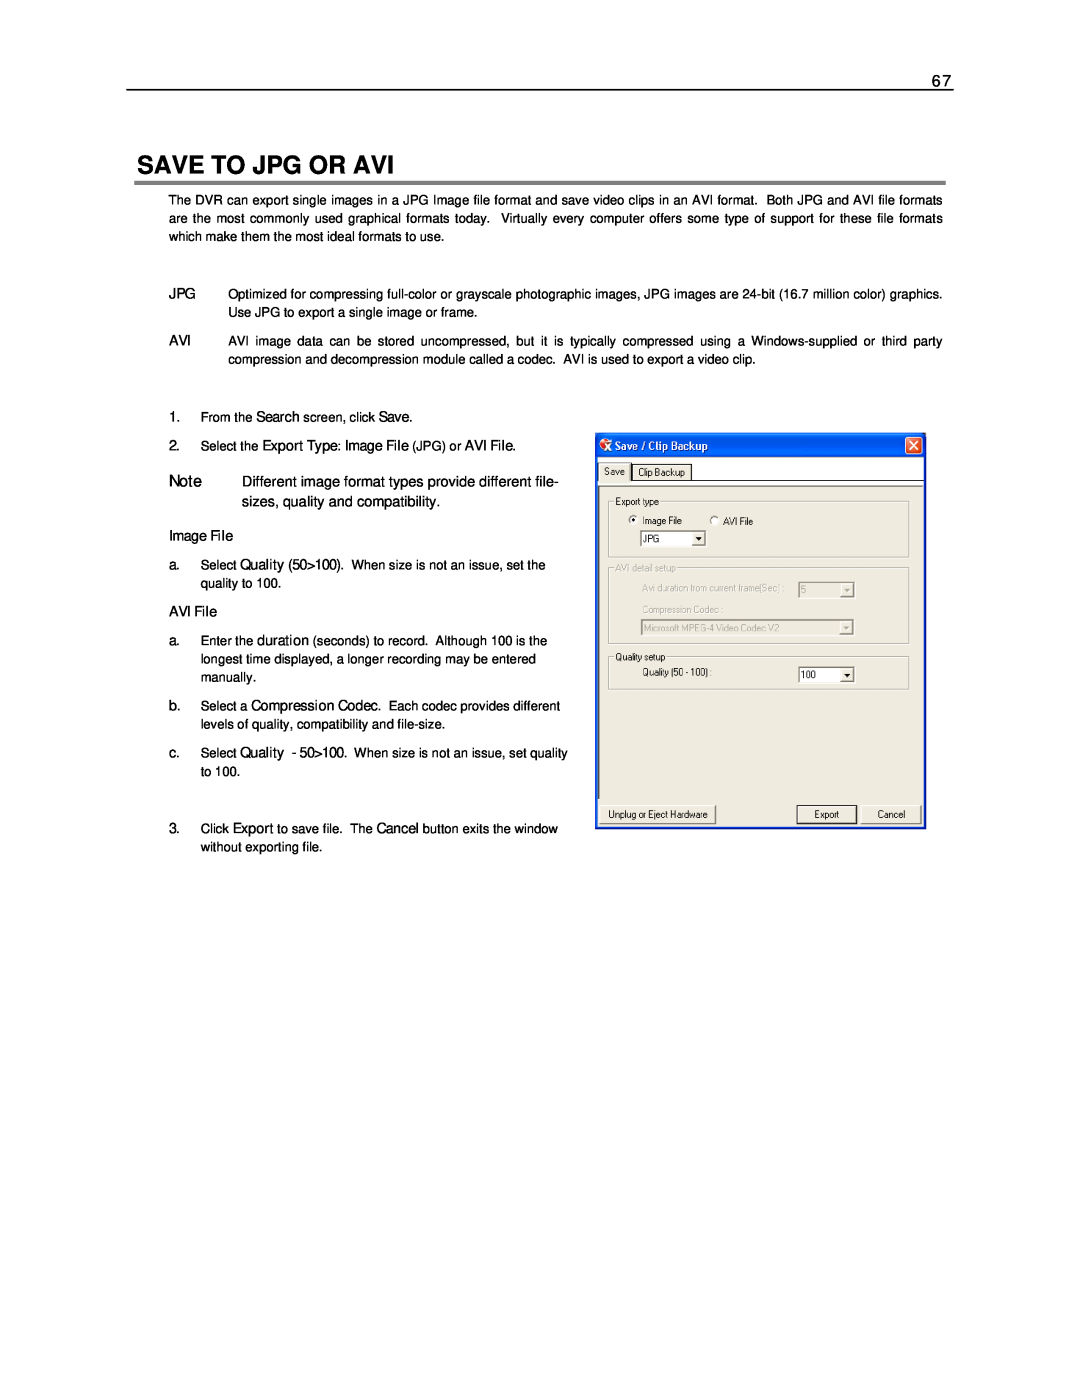 Toshiba NVS16-X, NVS32-X, NVS8-X user manual Save To Jpg Or Avi, Select the Export Type Image File JPG or AVI File 